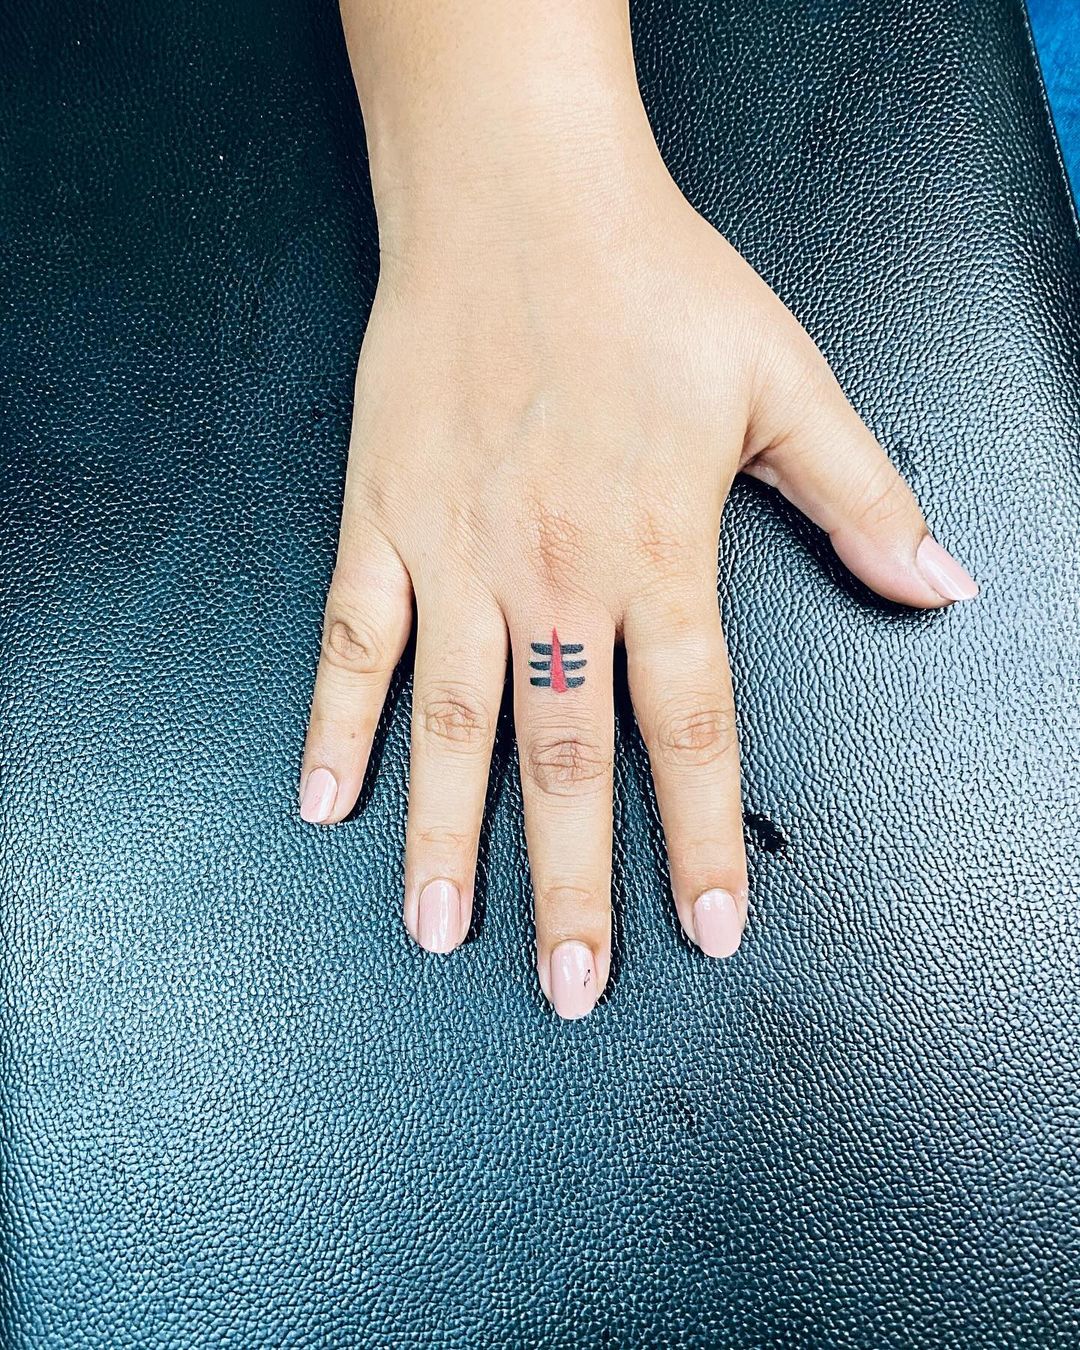 shiva symbol hand tattoo